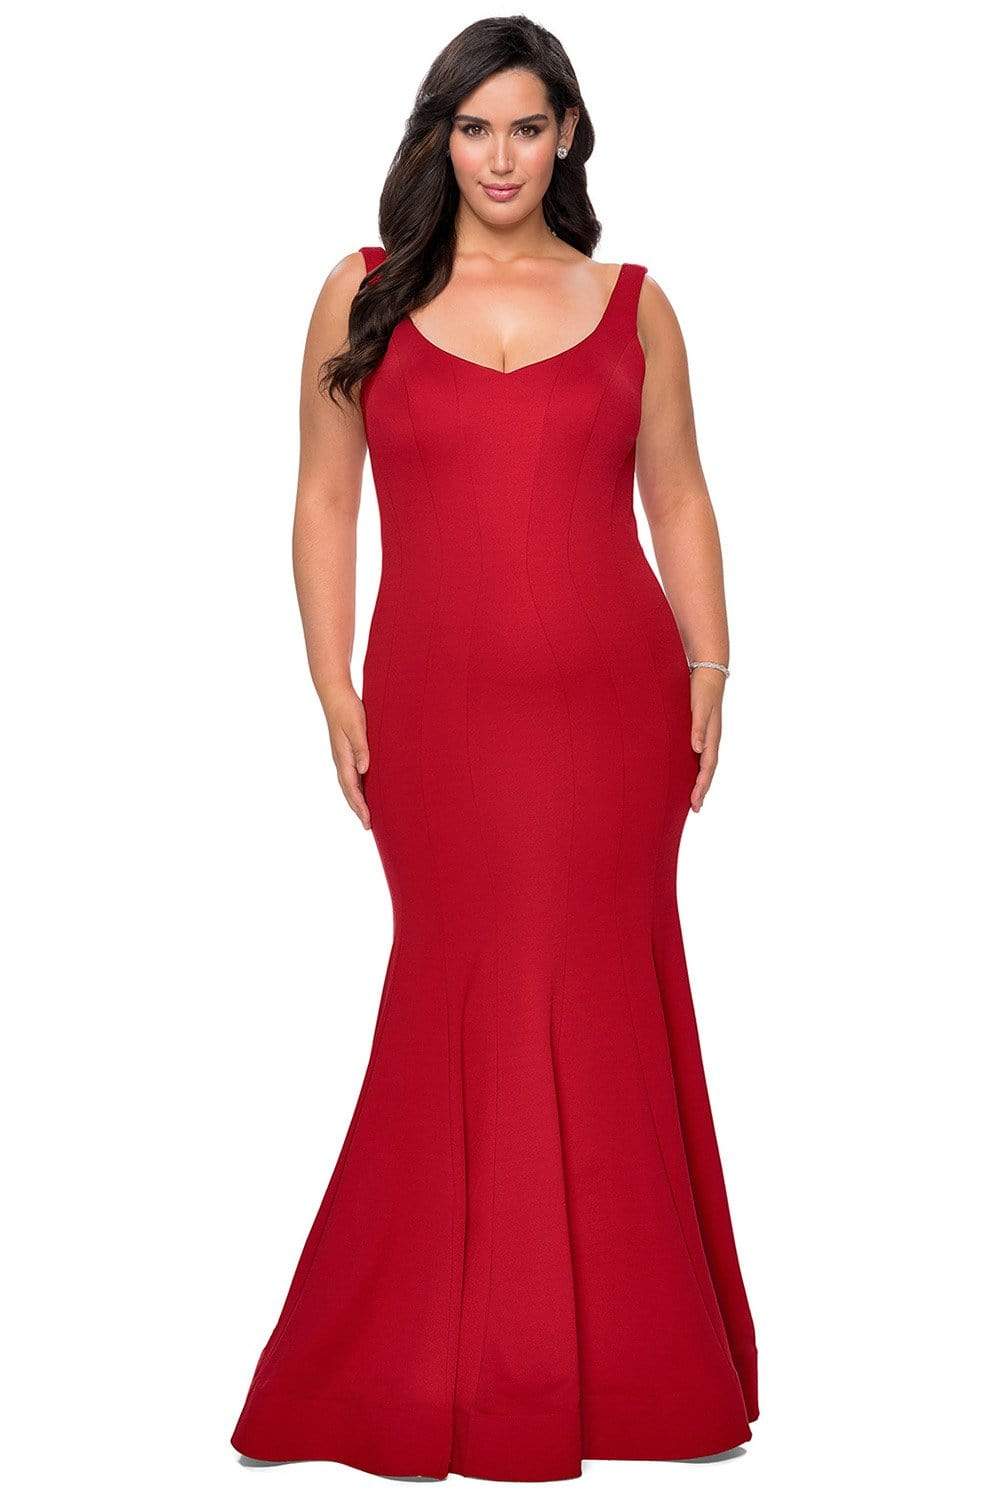 La Femme - 28975 V-Neck Jersey Mermaid Dress Evening Dresses 12W / Red